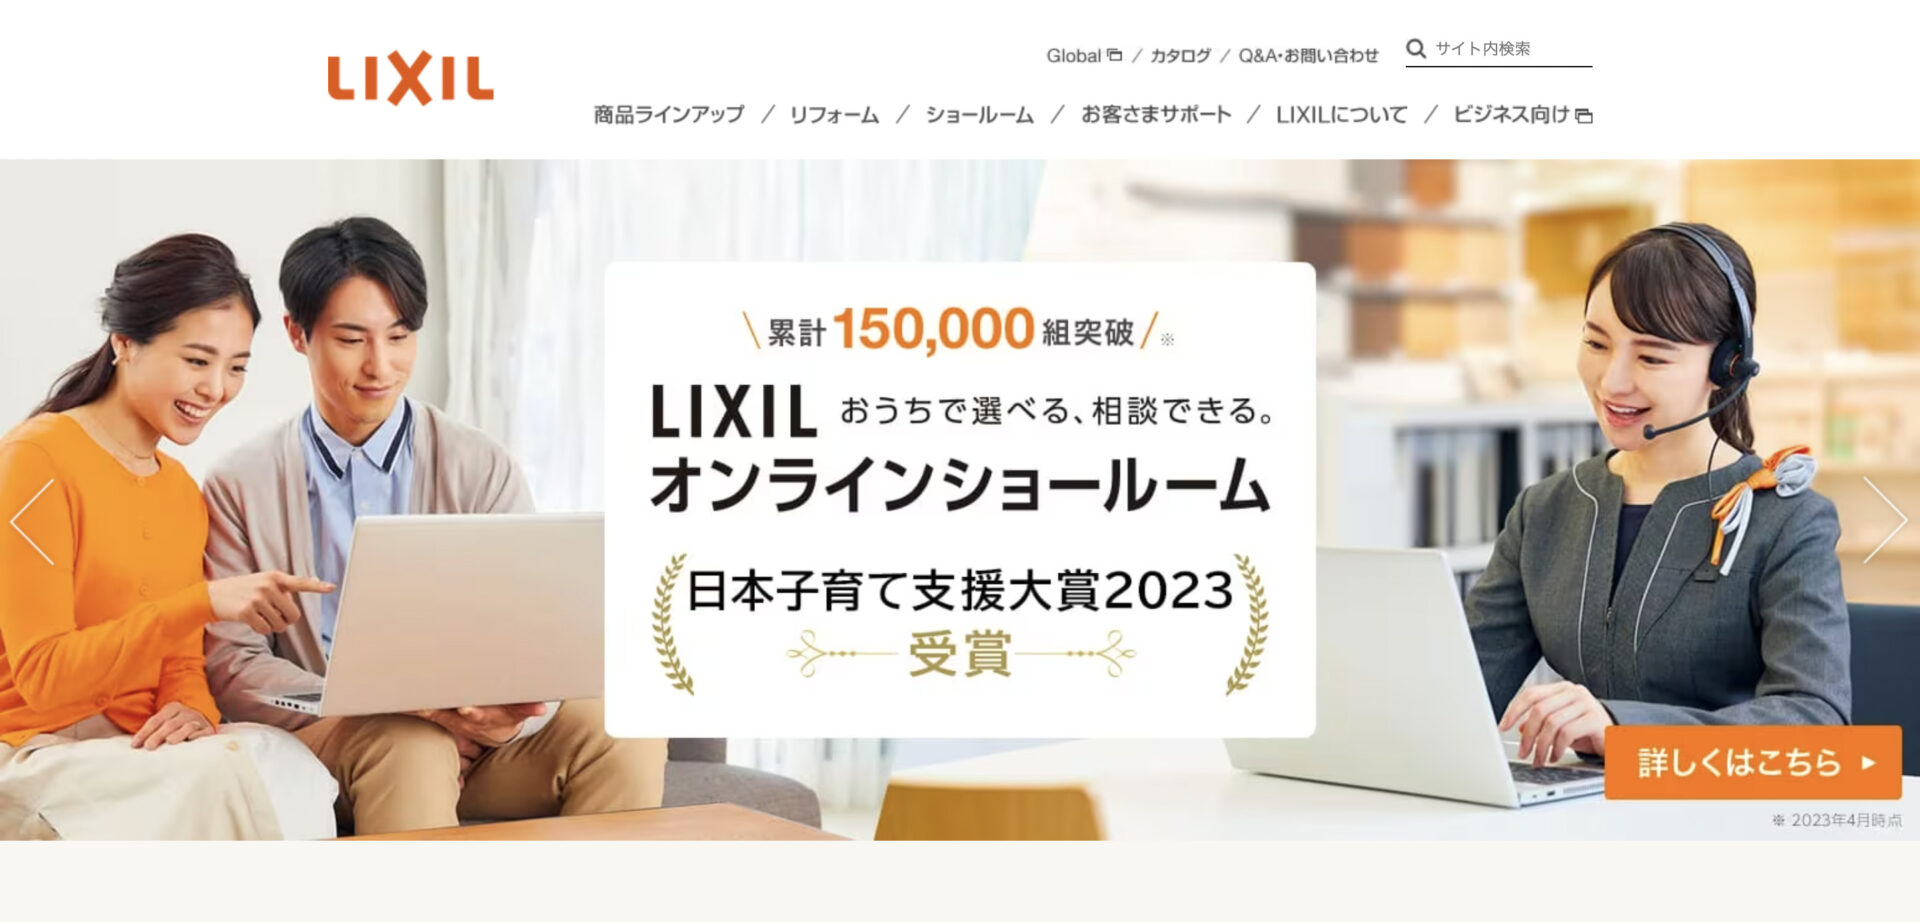 “LIXILのホームページ”